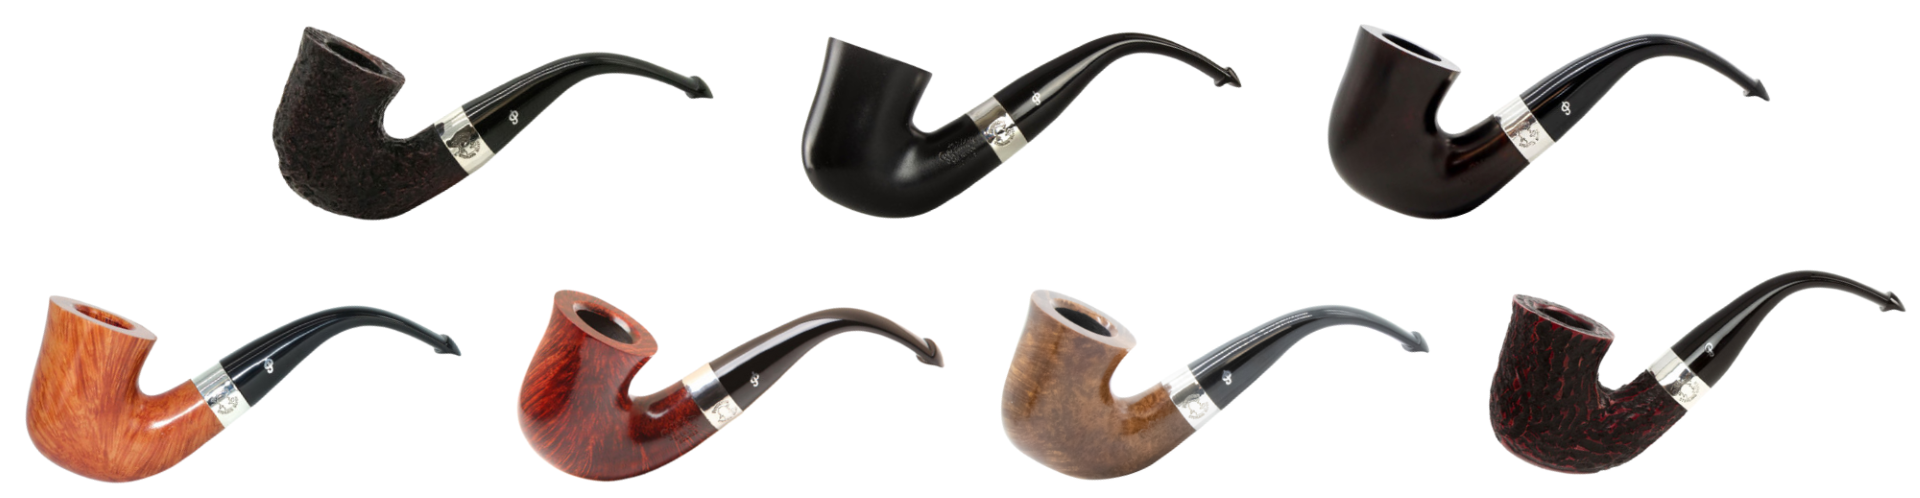 Peterson Sherlock Holmes Original Tobacco Pipe